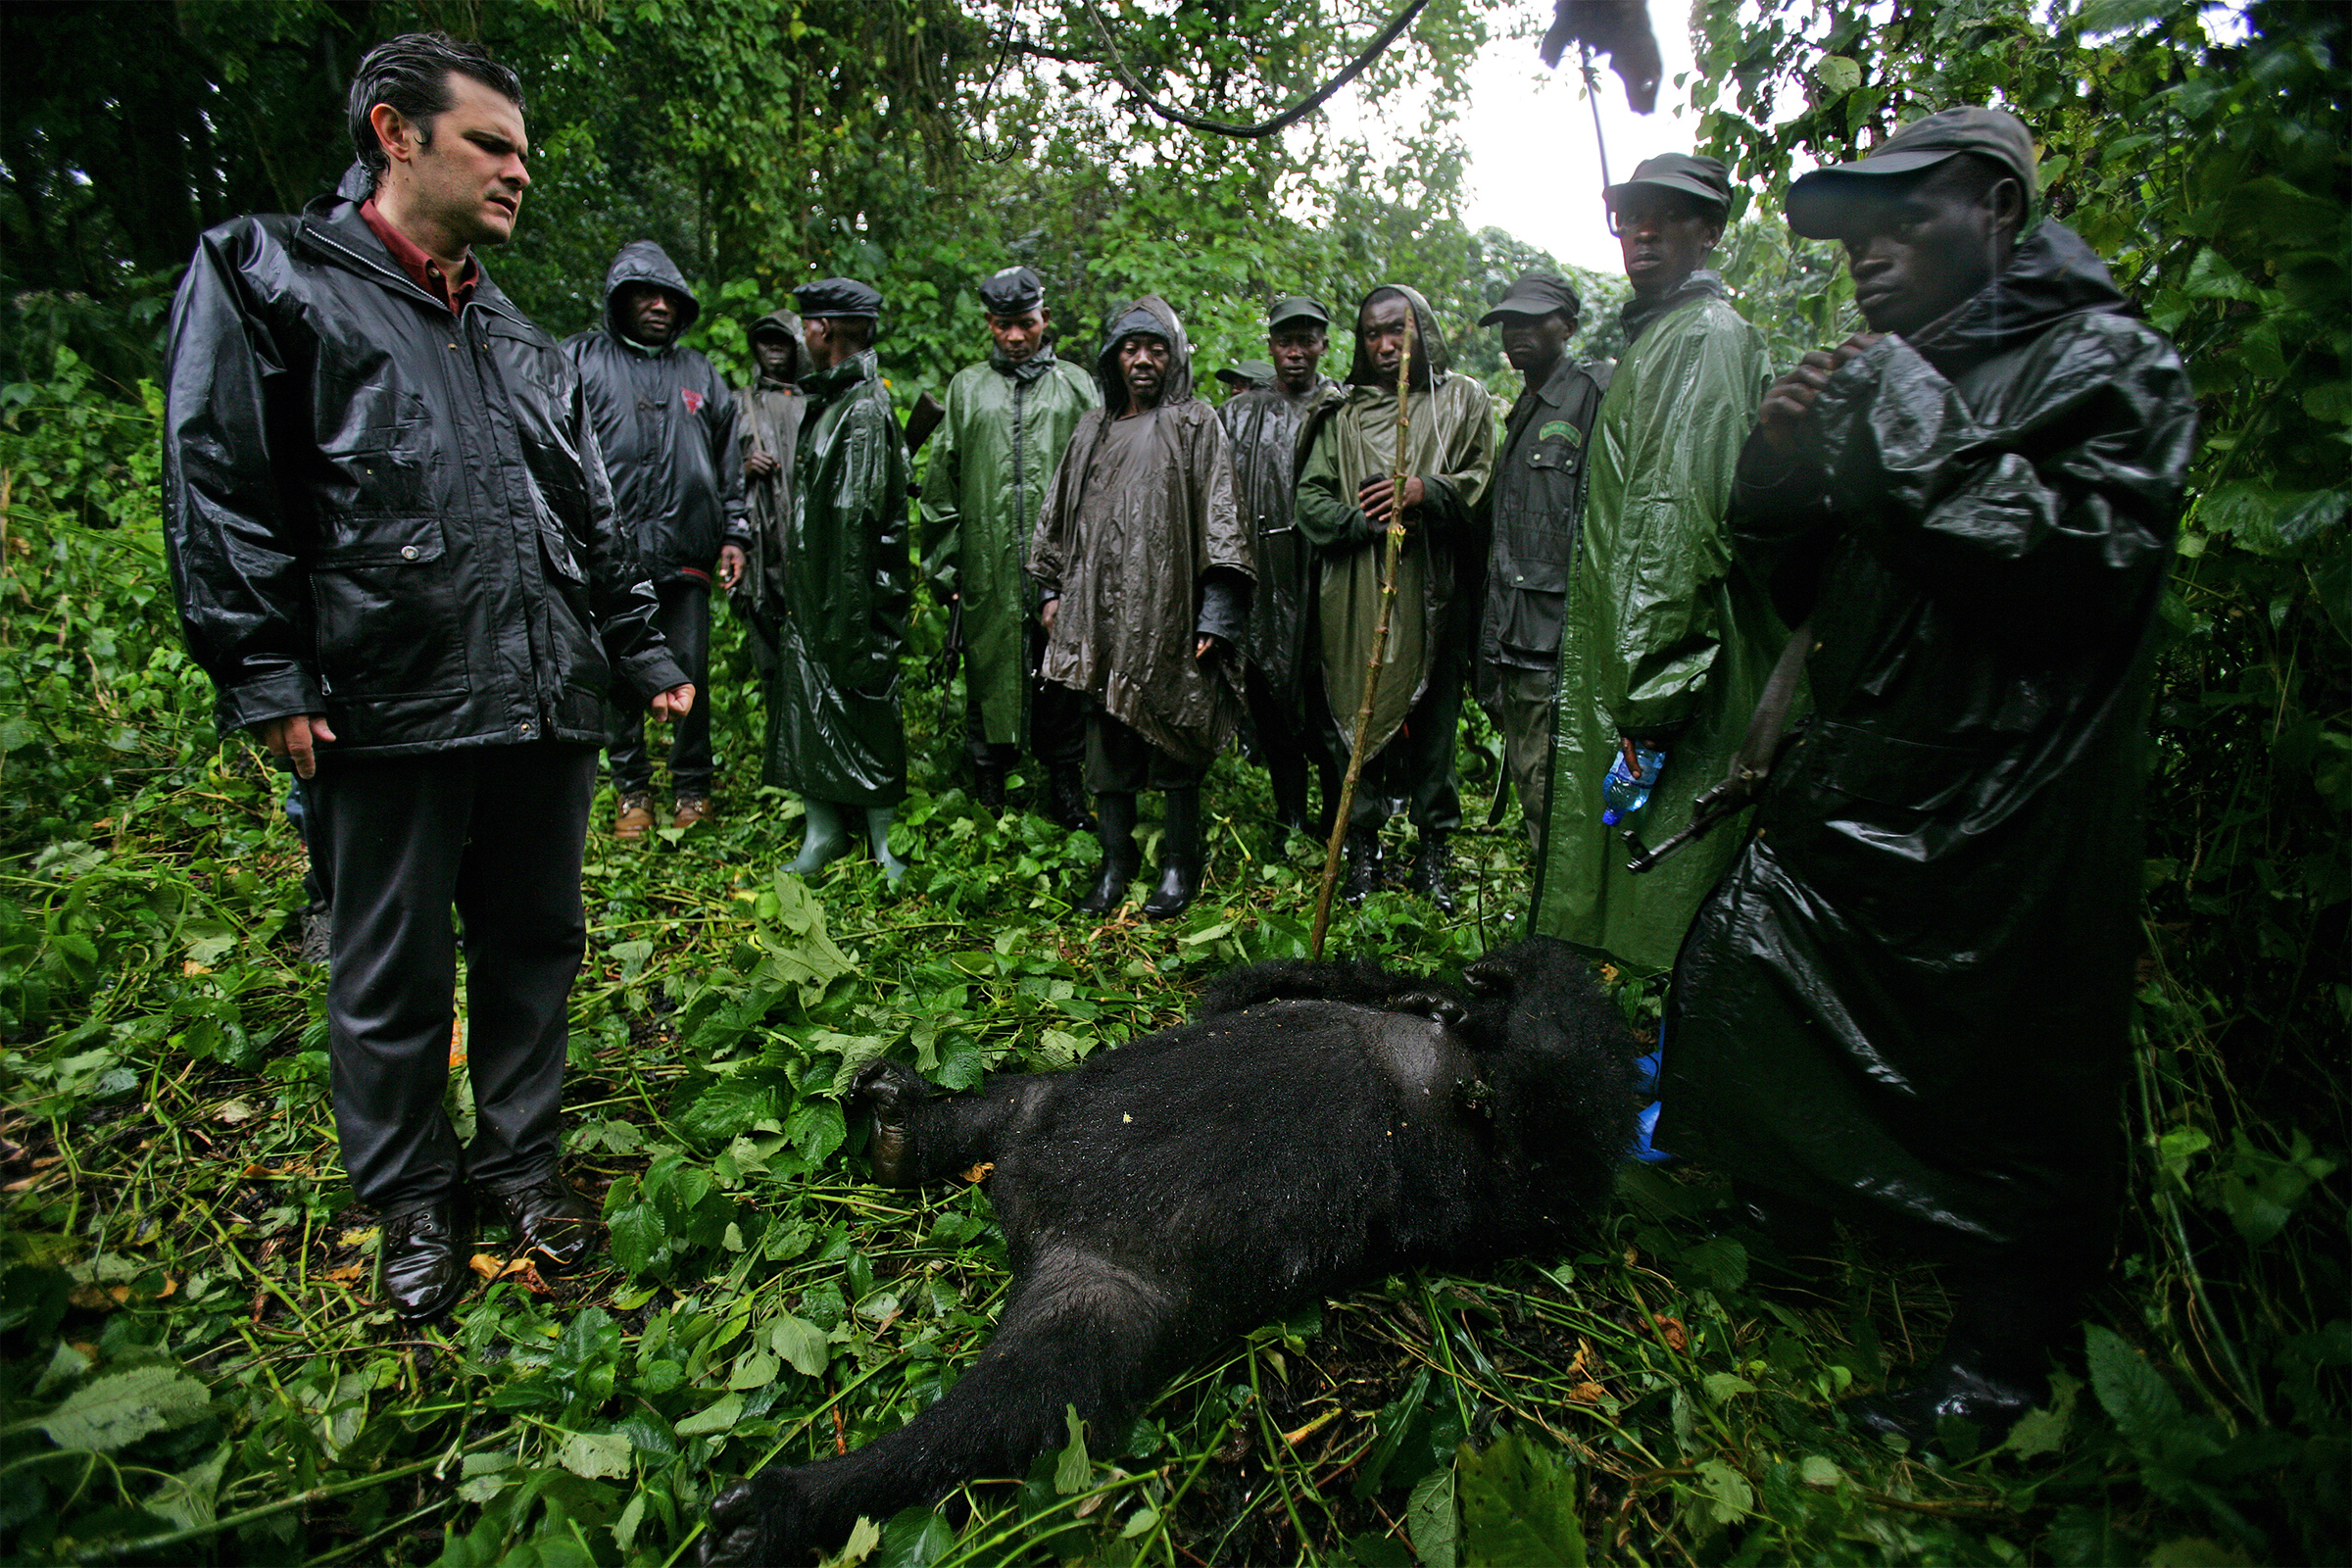 Emmanuel De Merode and rangers standing with a murdered gorilla